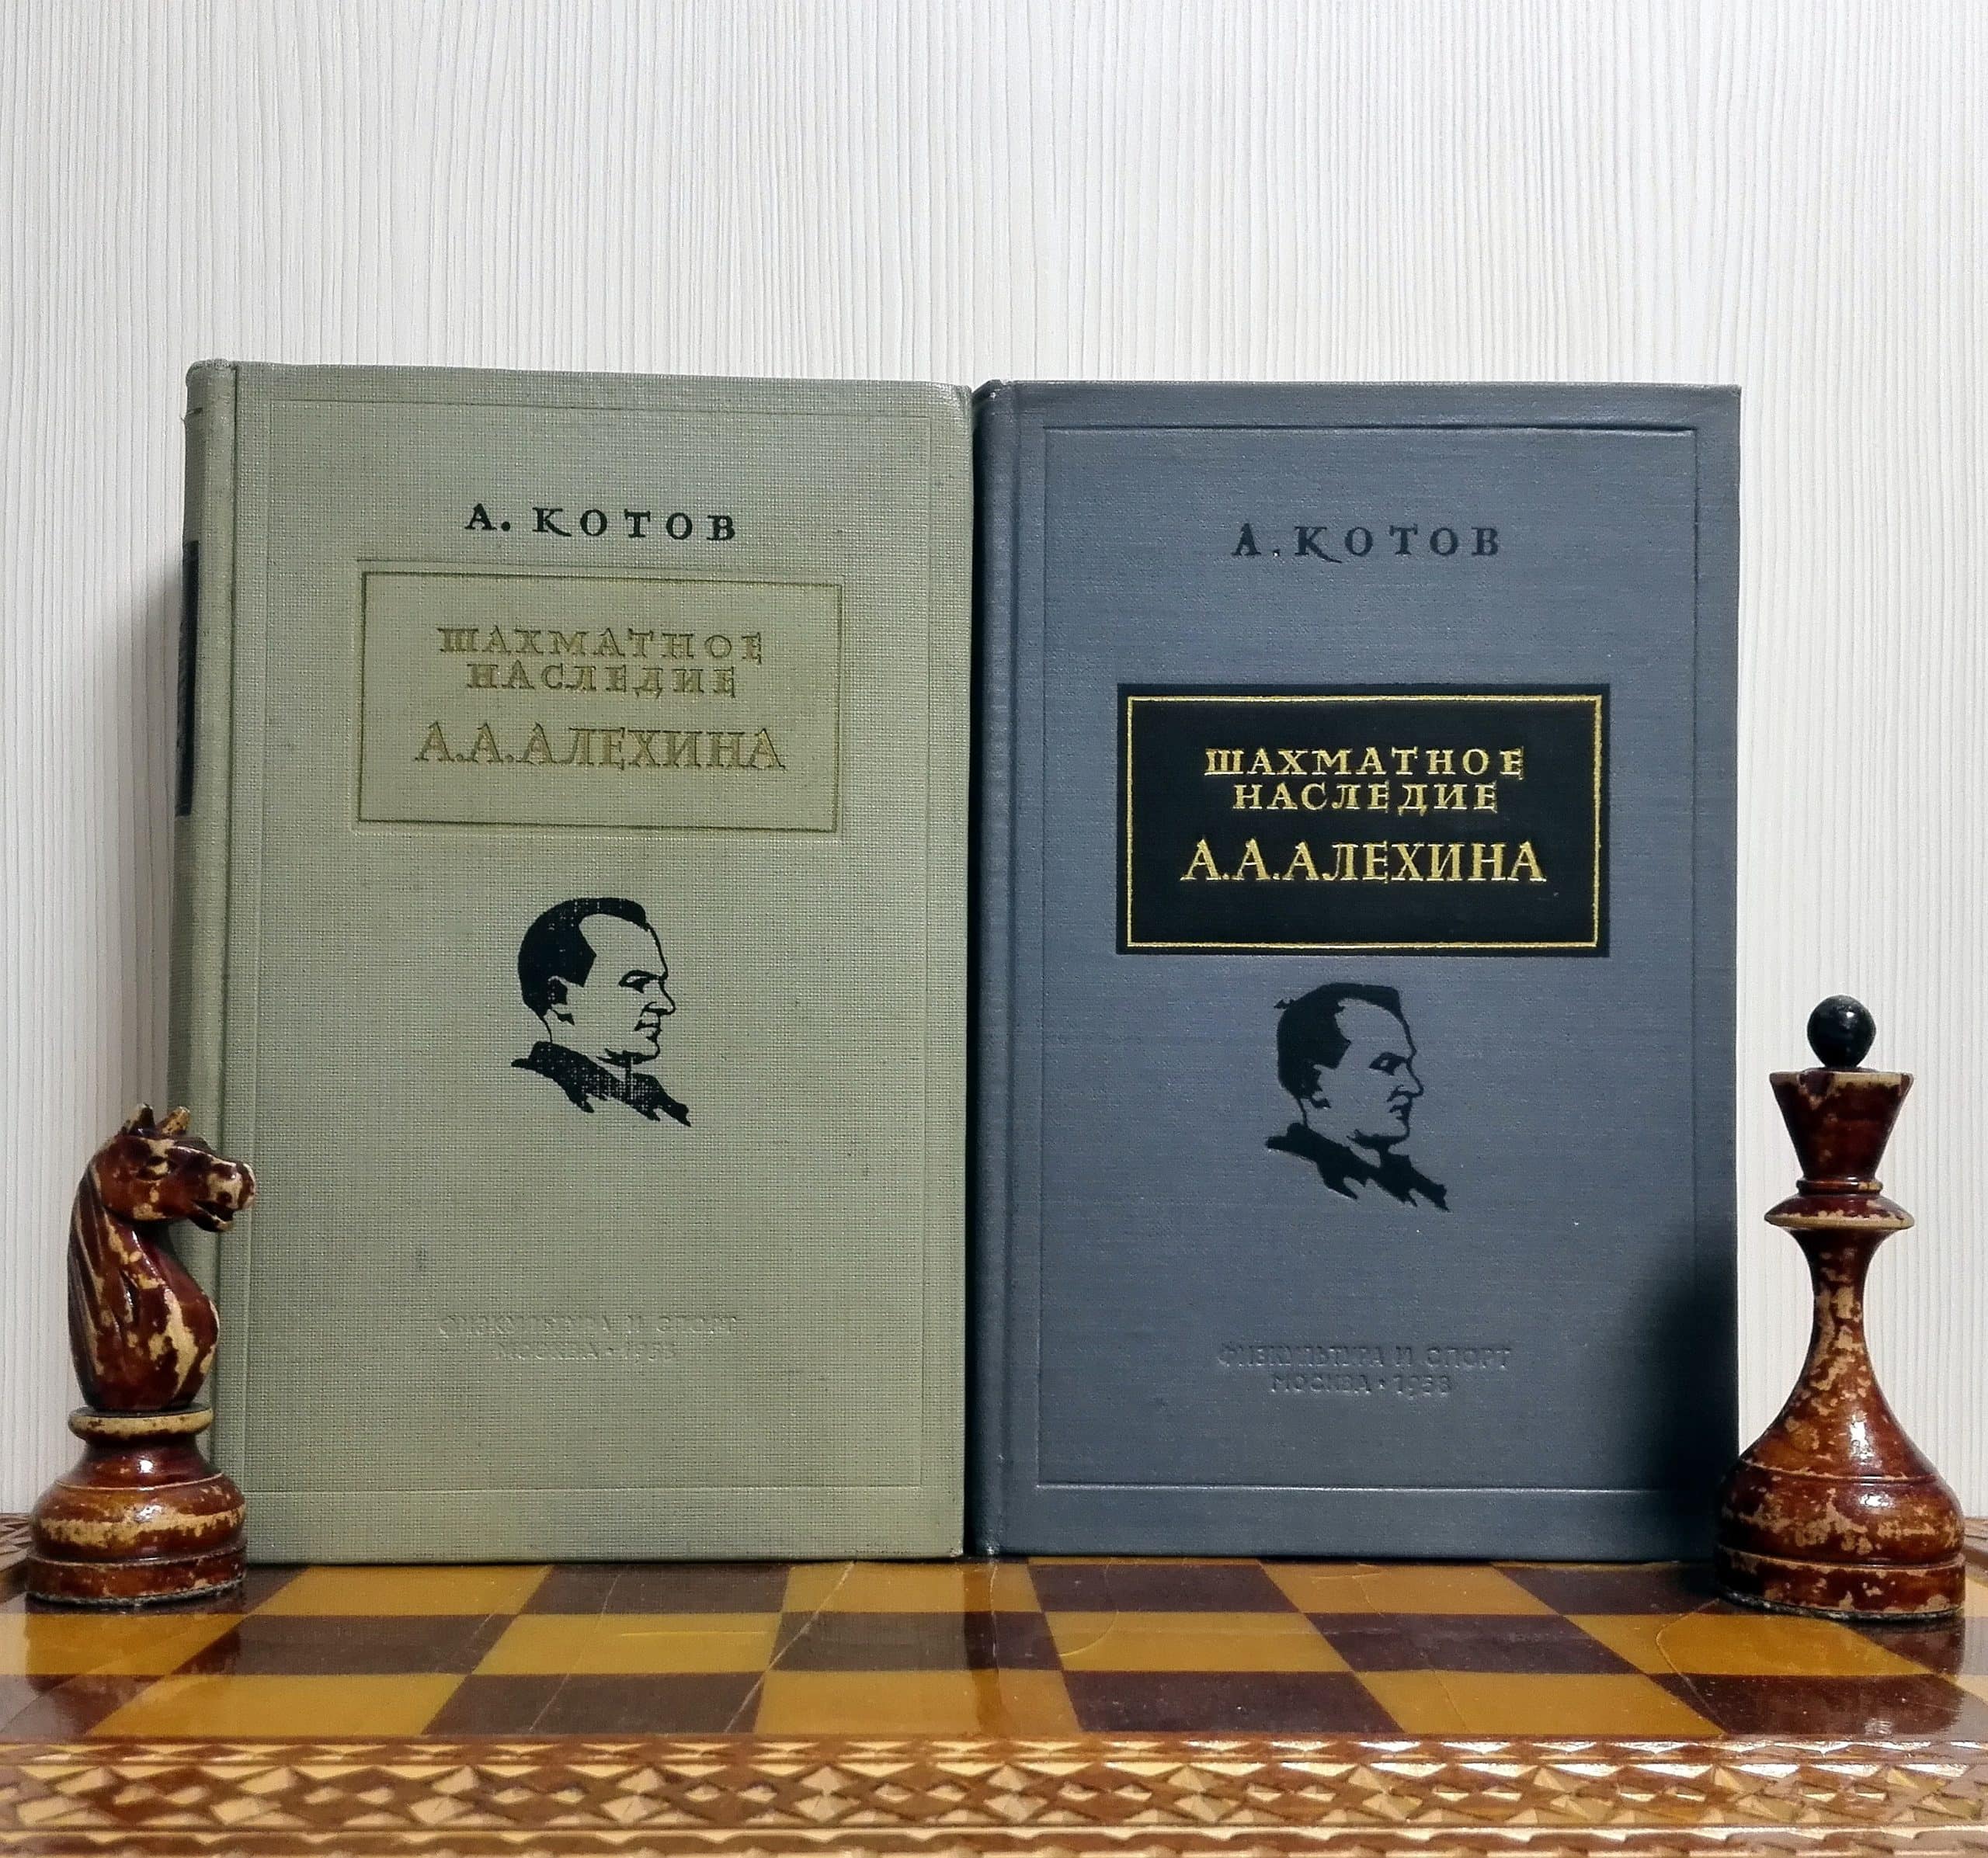 Antique Soviet Chess Books Kotov Chess legacy of Alekhin Part 1-2